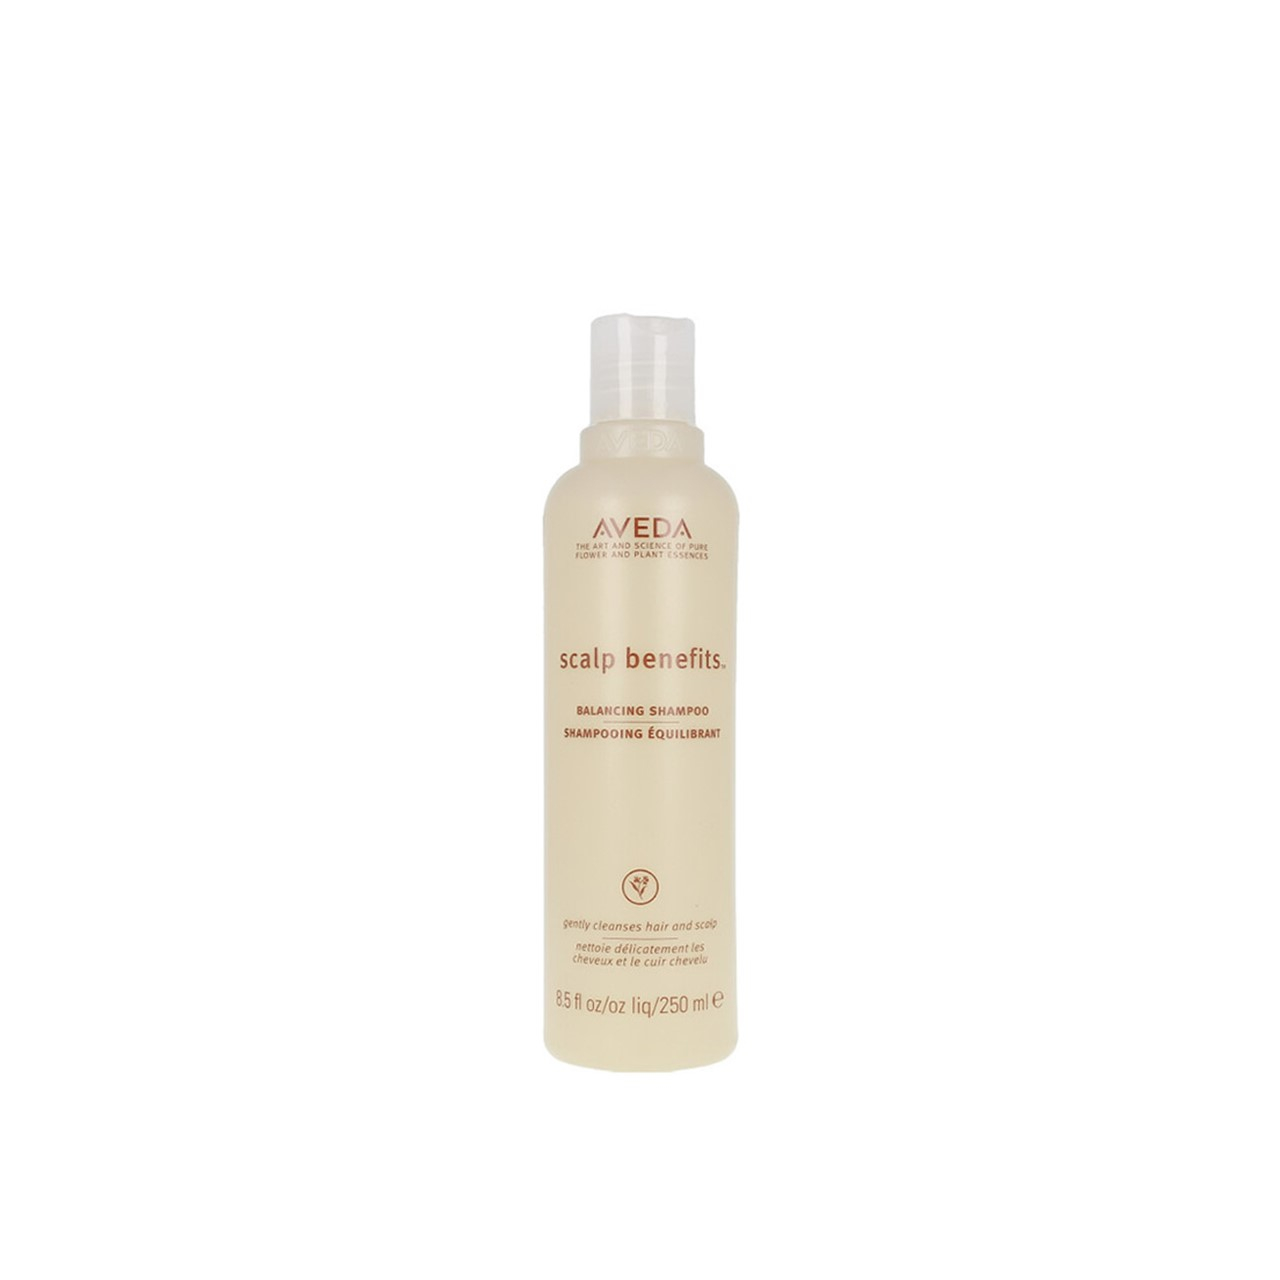 Aveda Scalp Benefits Balancing Shampoo 250ml (8.5 fl oz)